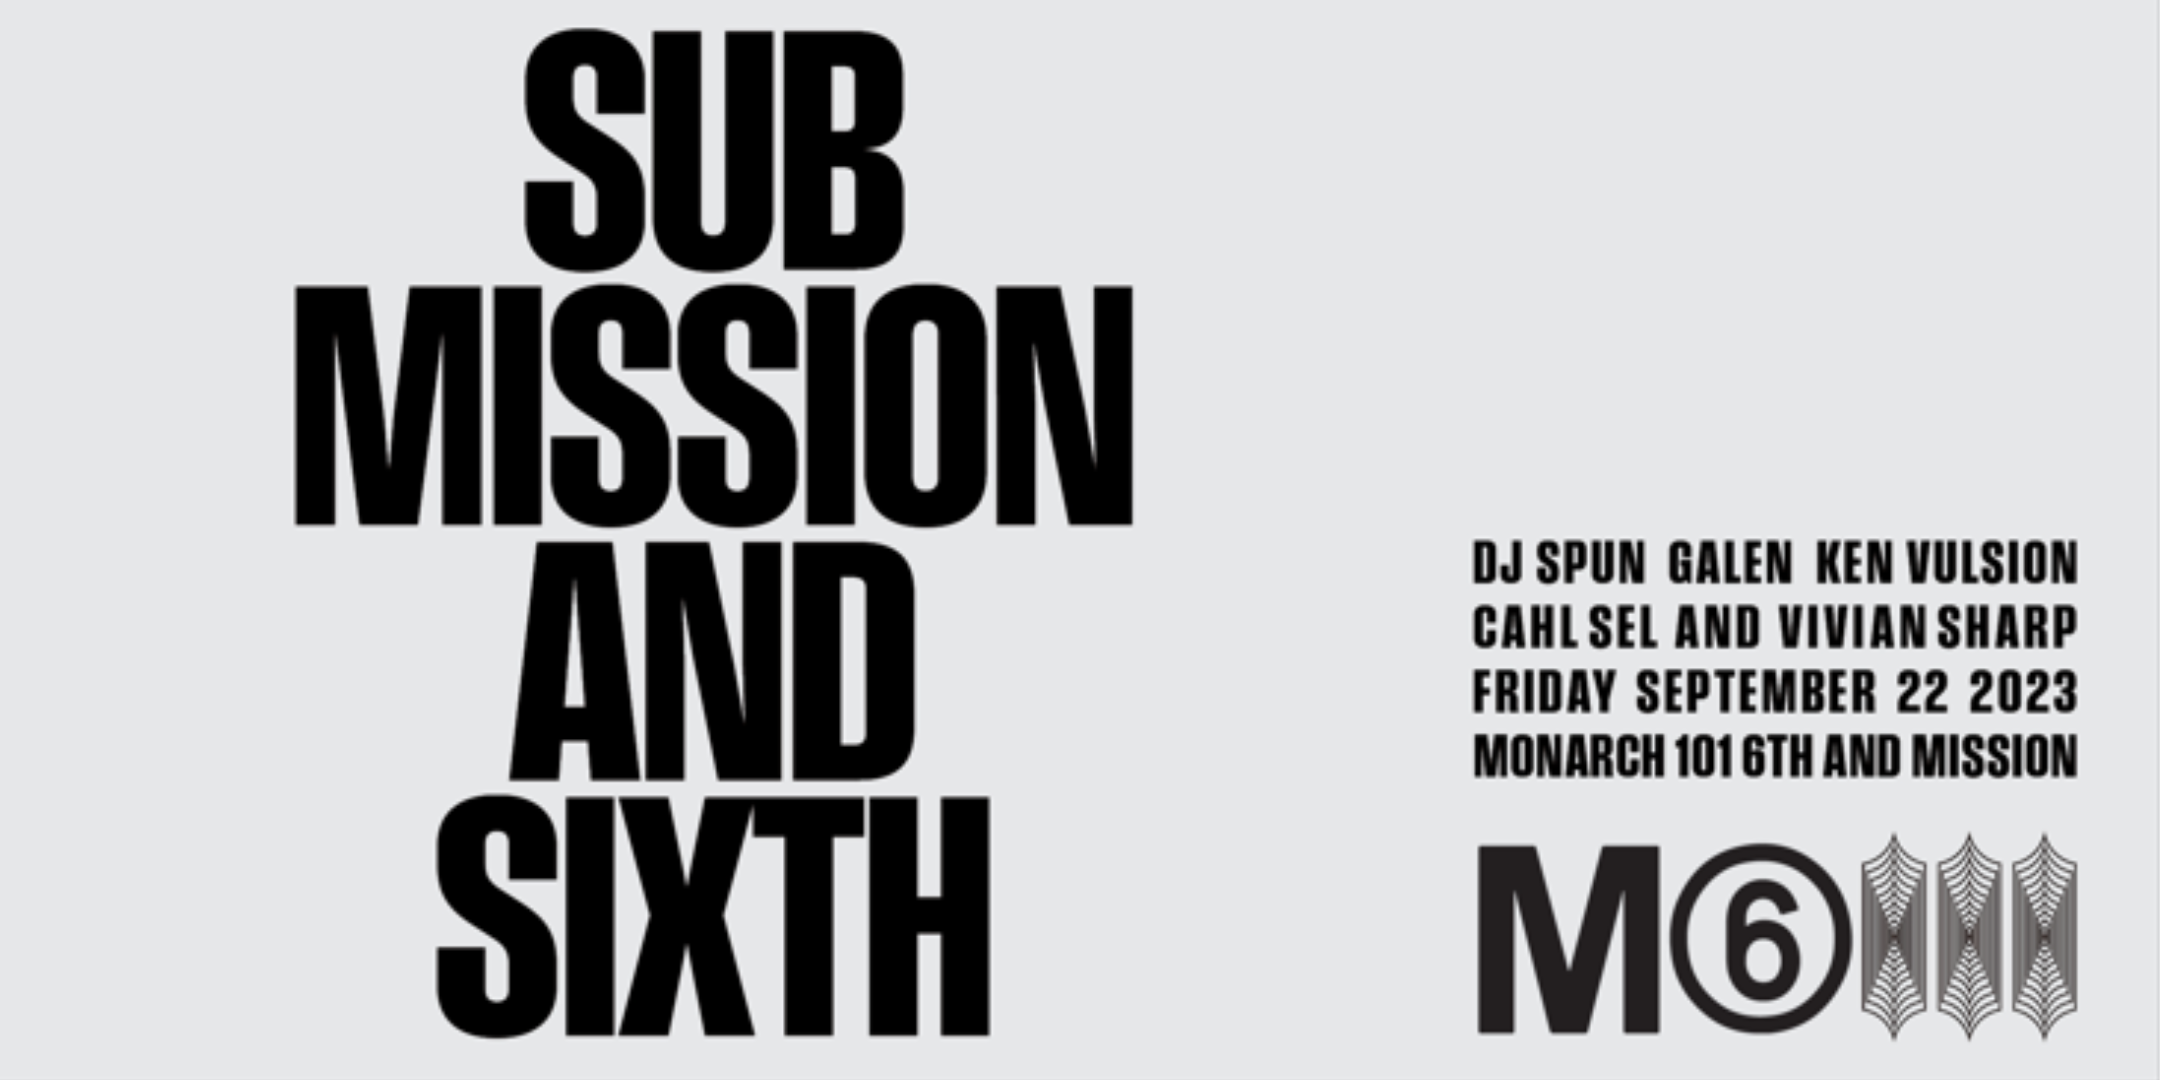 SUB MISSION - DJ Spun (NYC) - Galen - Ken Vulsion - Cahl Sel - VIVIAN SHARP - フライヤー表